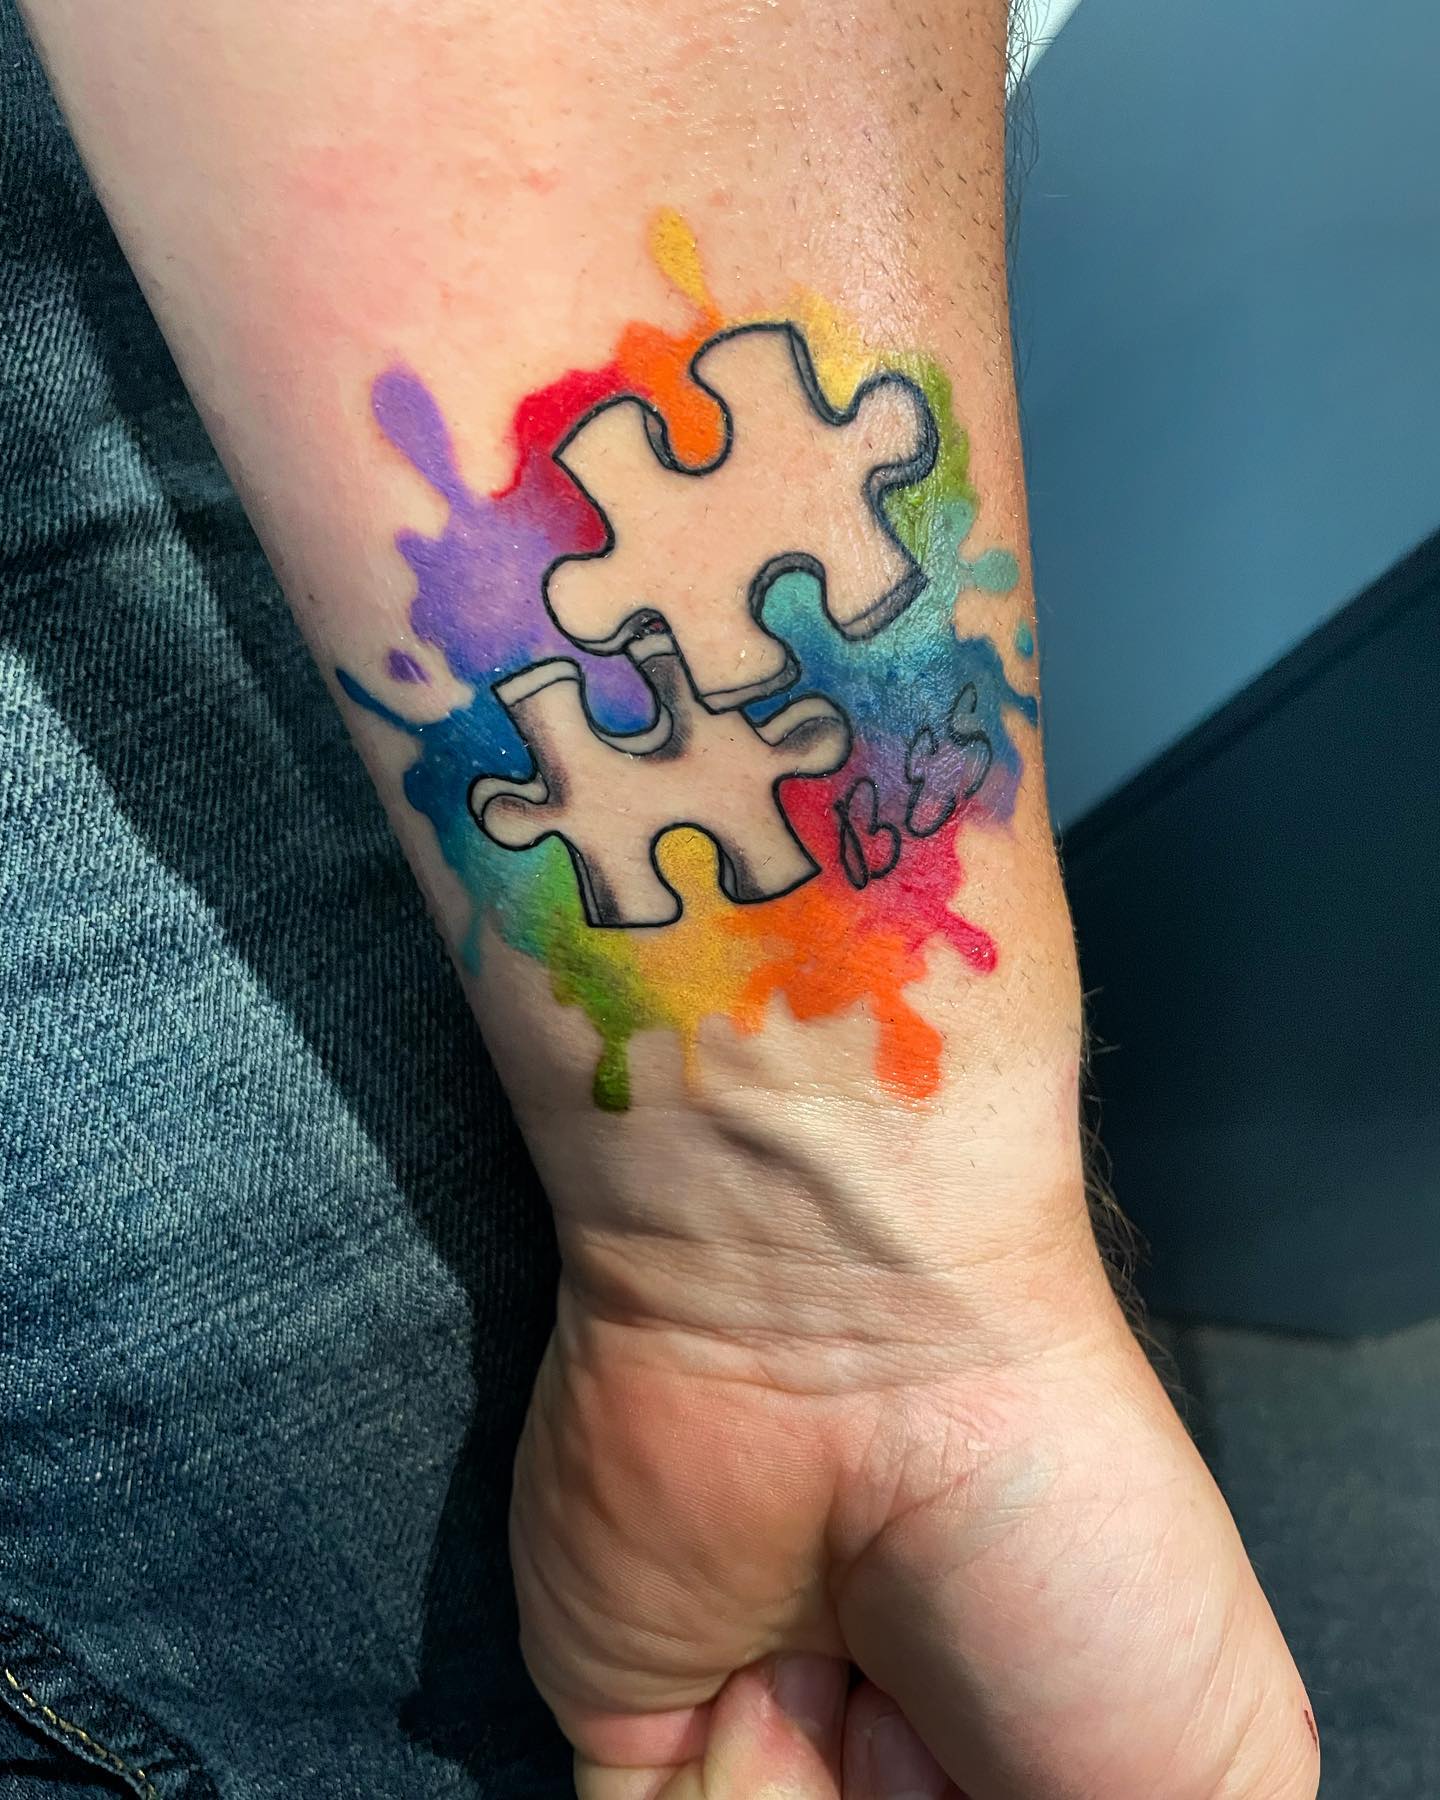 Autism Tattoos: 30+ Inspirational Design Ideas to Raise Awareness - 100 Tattoos